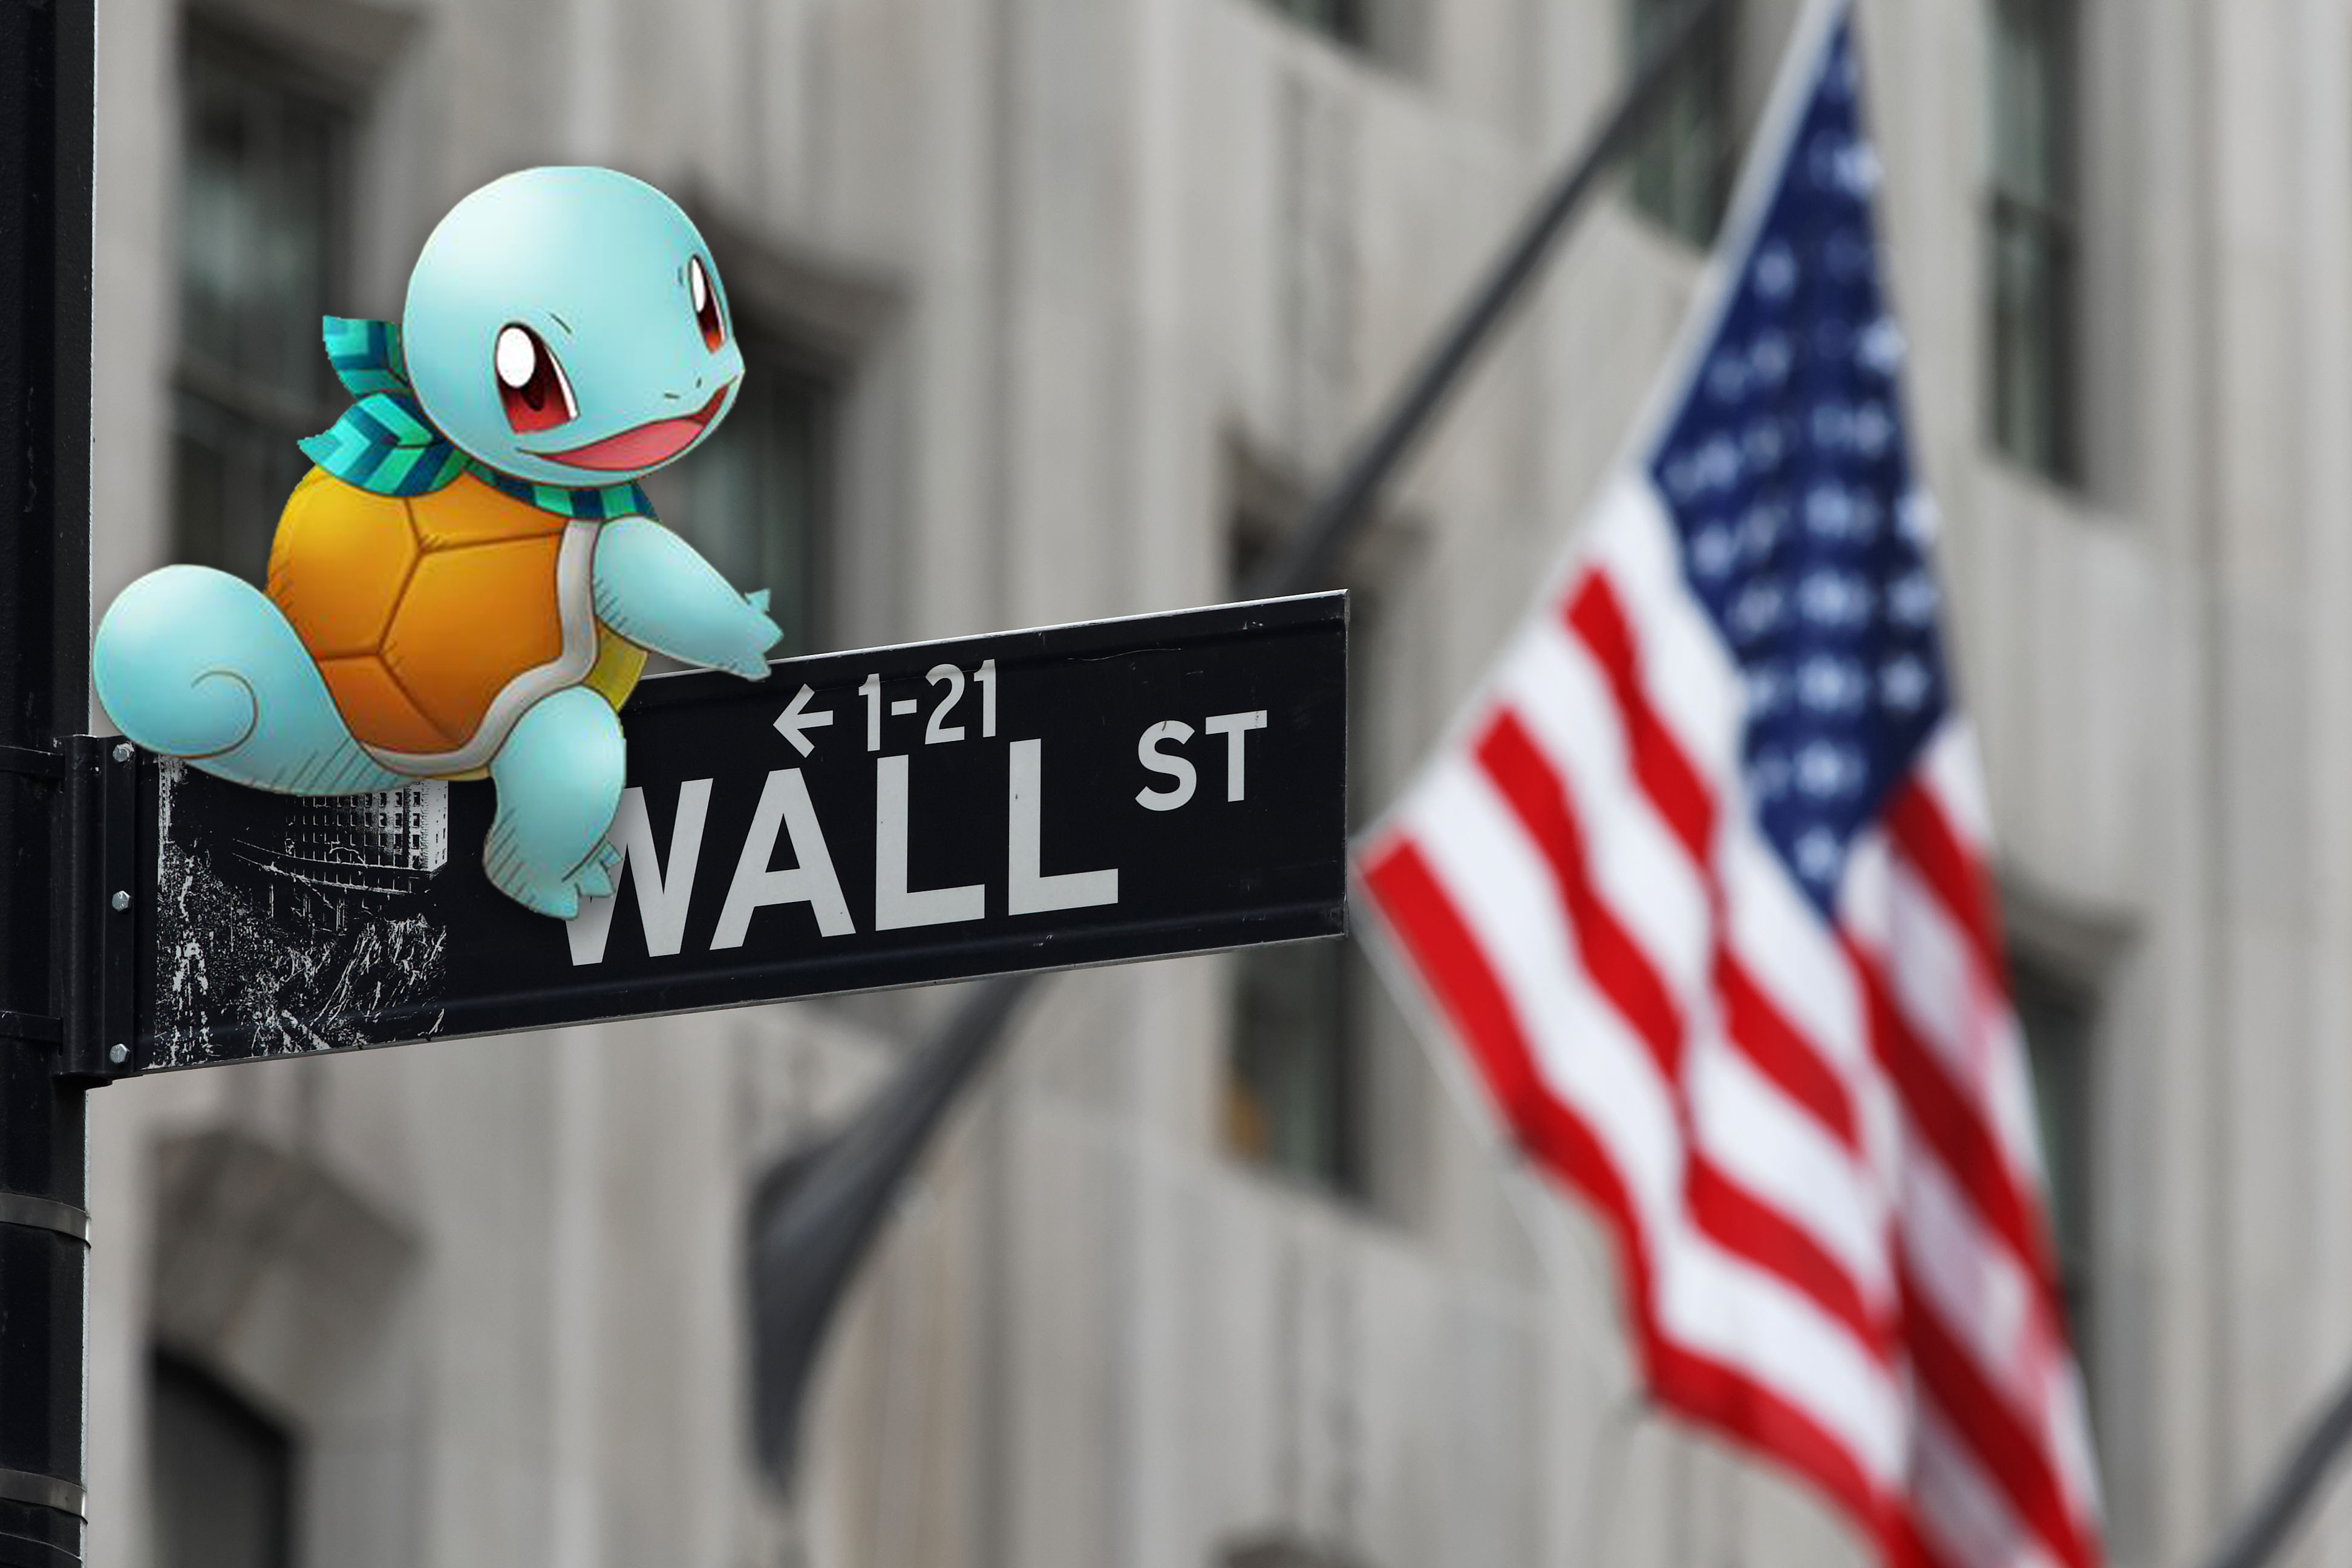 How has Pokémon impacted Wall Street?